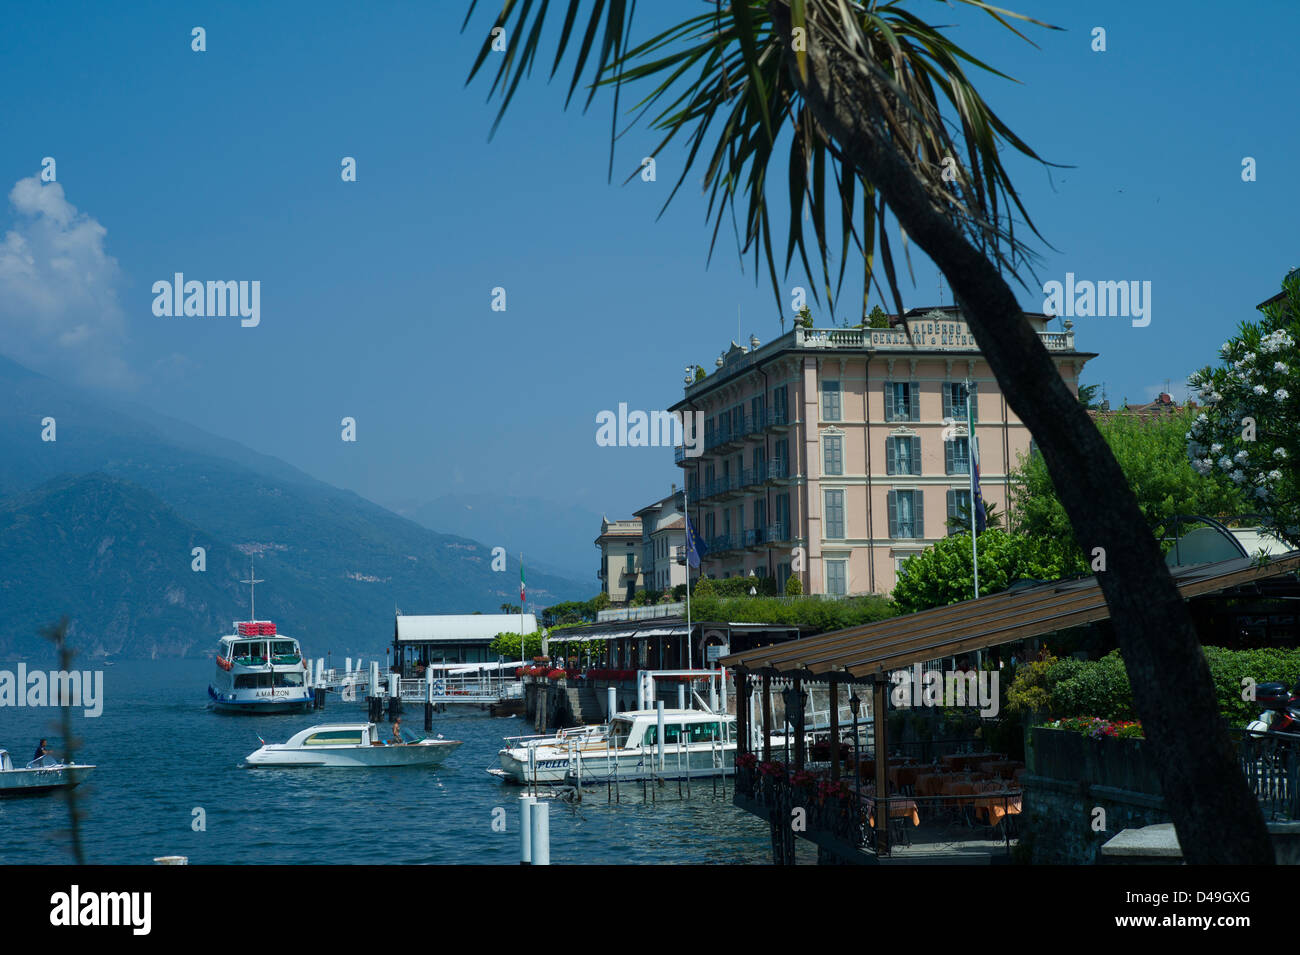 Iatlian Lakes, Bellagio Lake Como, Italy,July 2010. Passenger ferry and Water Taxis terminals at Bellagio Lake Como. Stock Photo